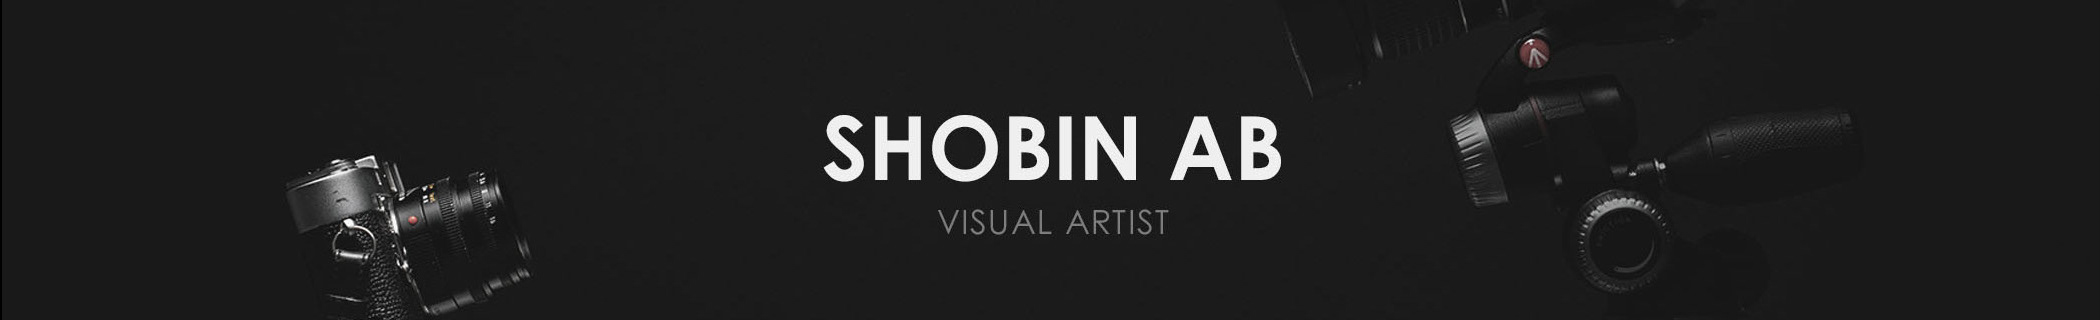 Shobin AB's profile banner